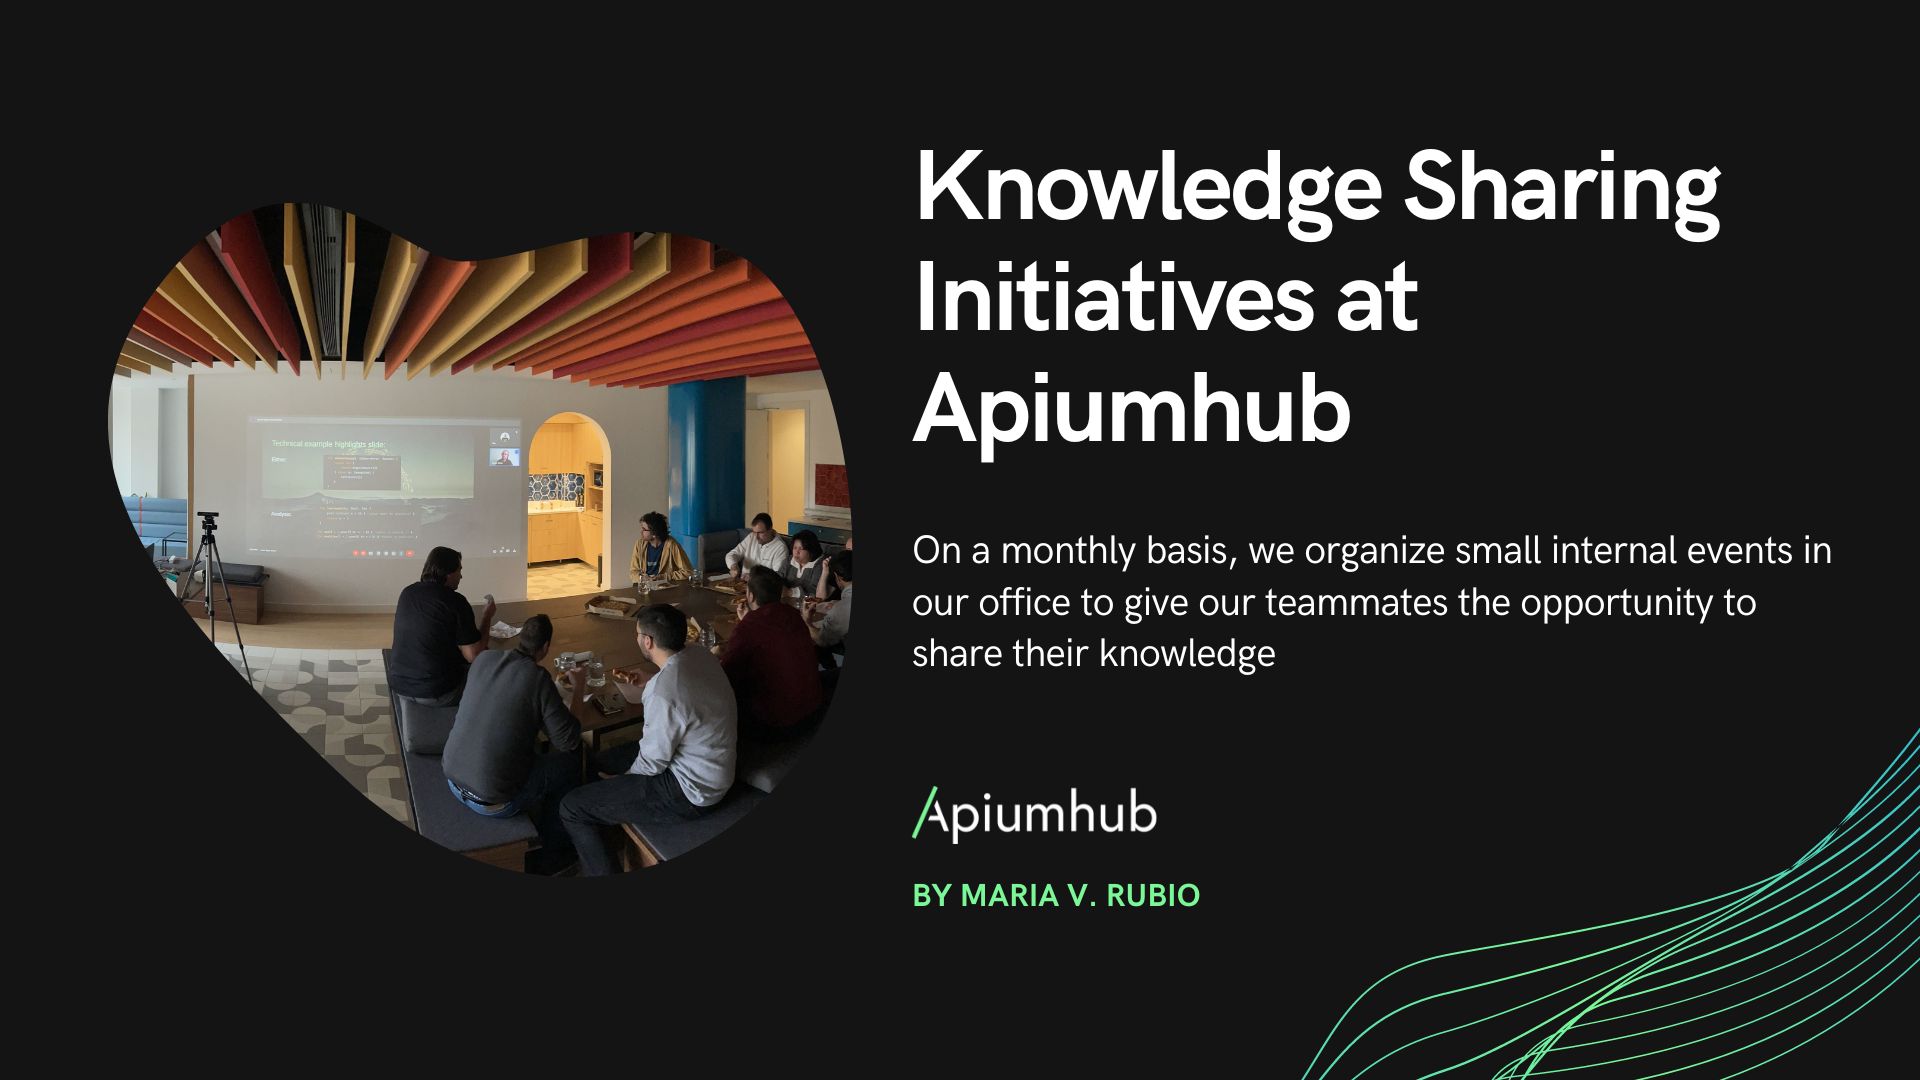 New Knowledge Sharing Initiatives at Apiumhub